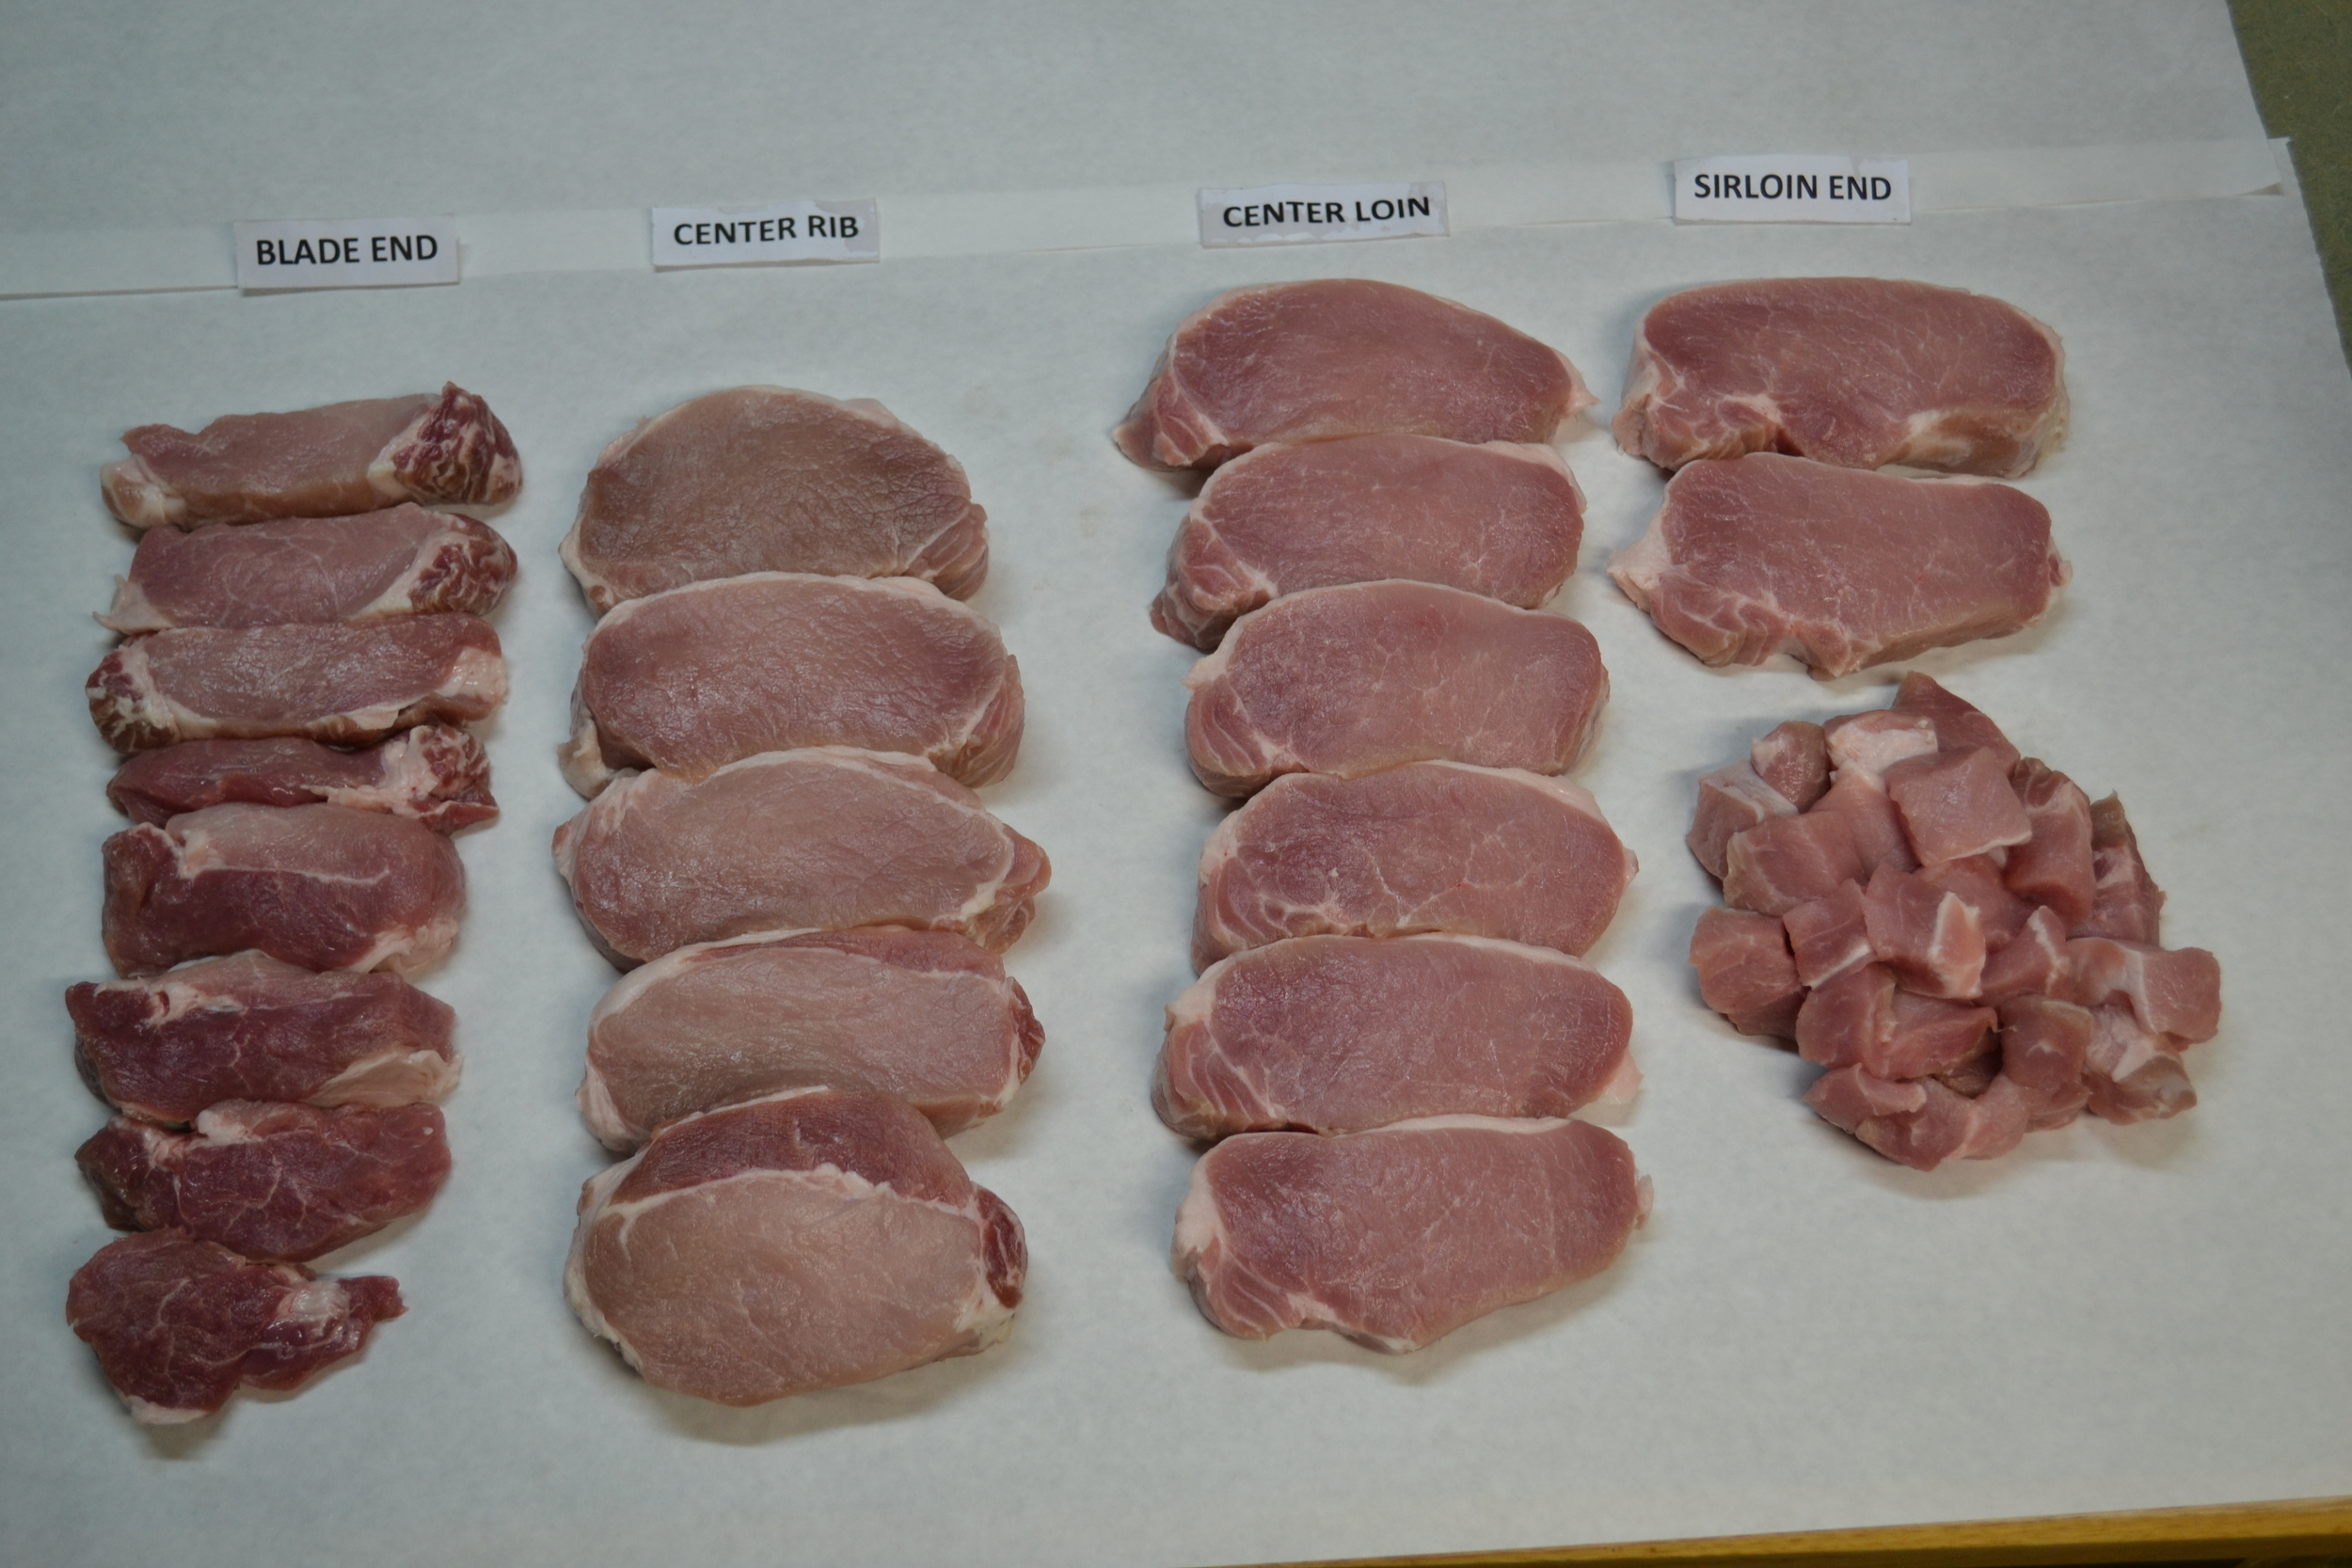 Pork Loin Cutting Chart